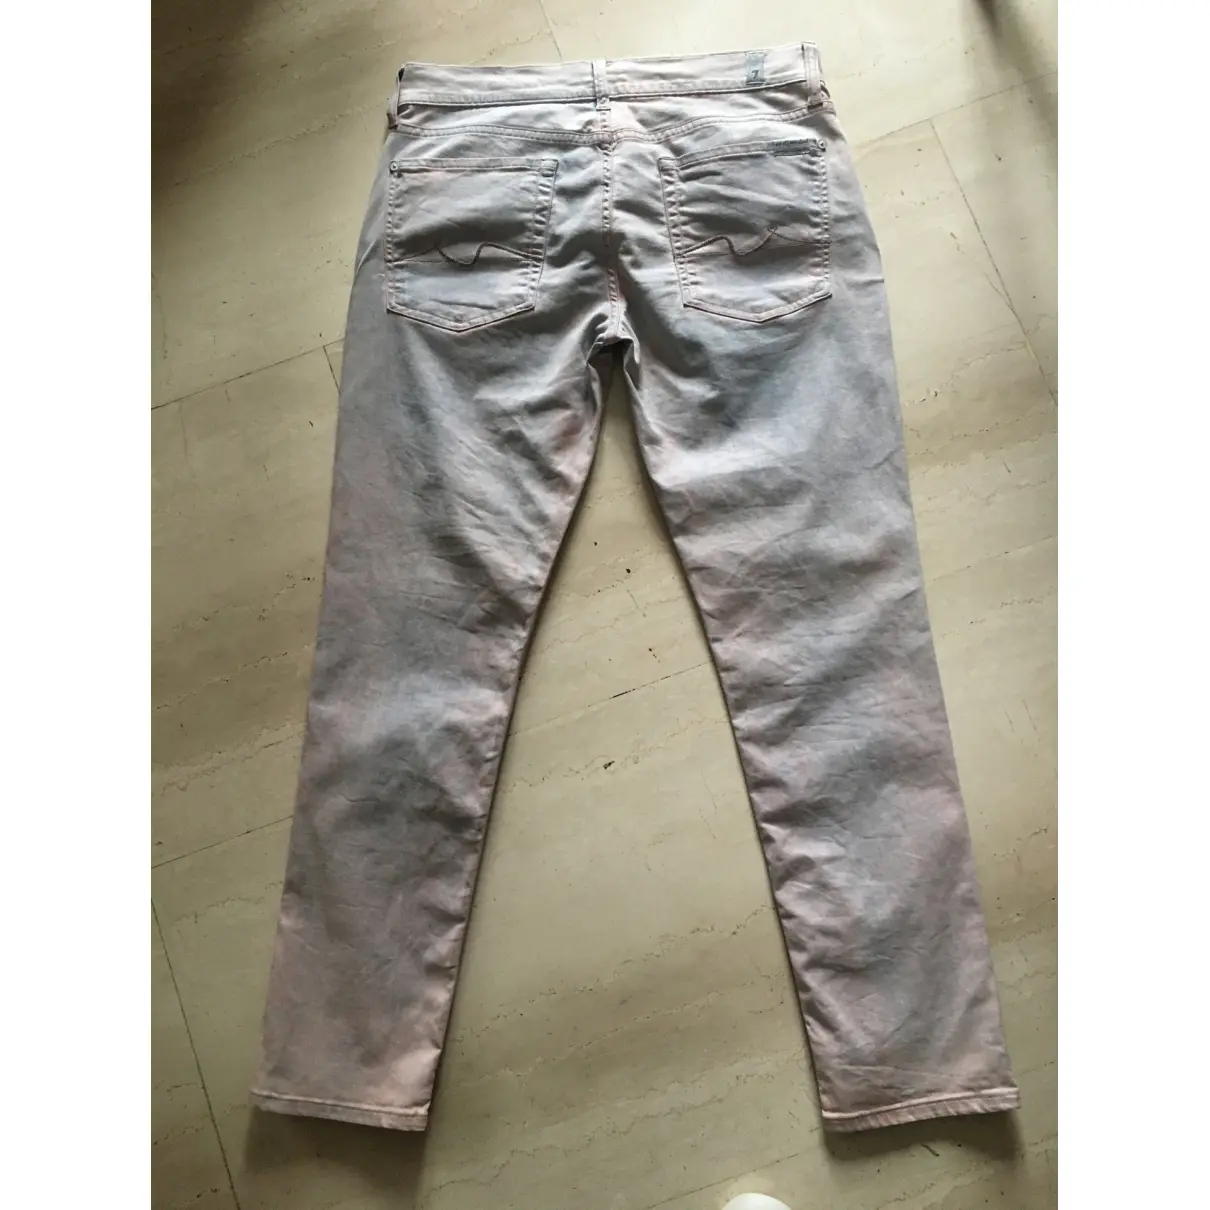 Buy 7 For All Mankind Boyfriend jeans online